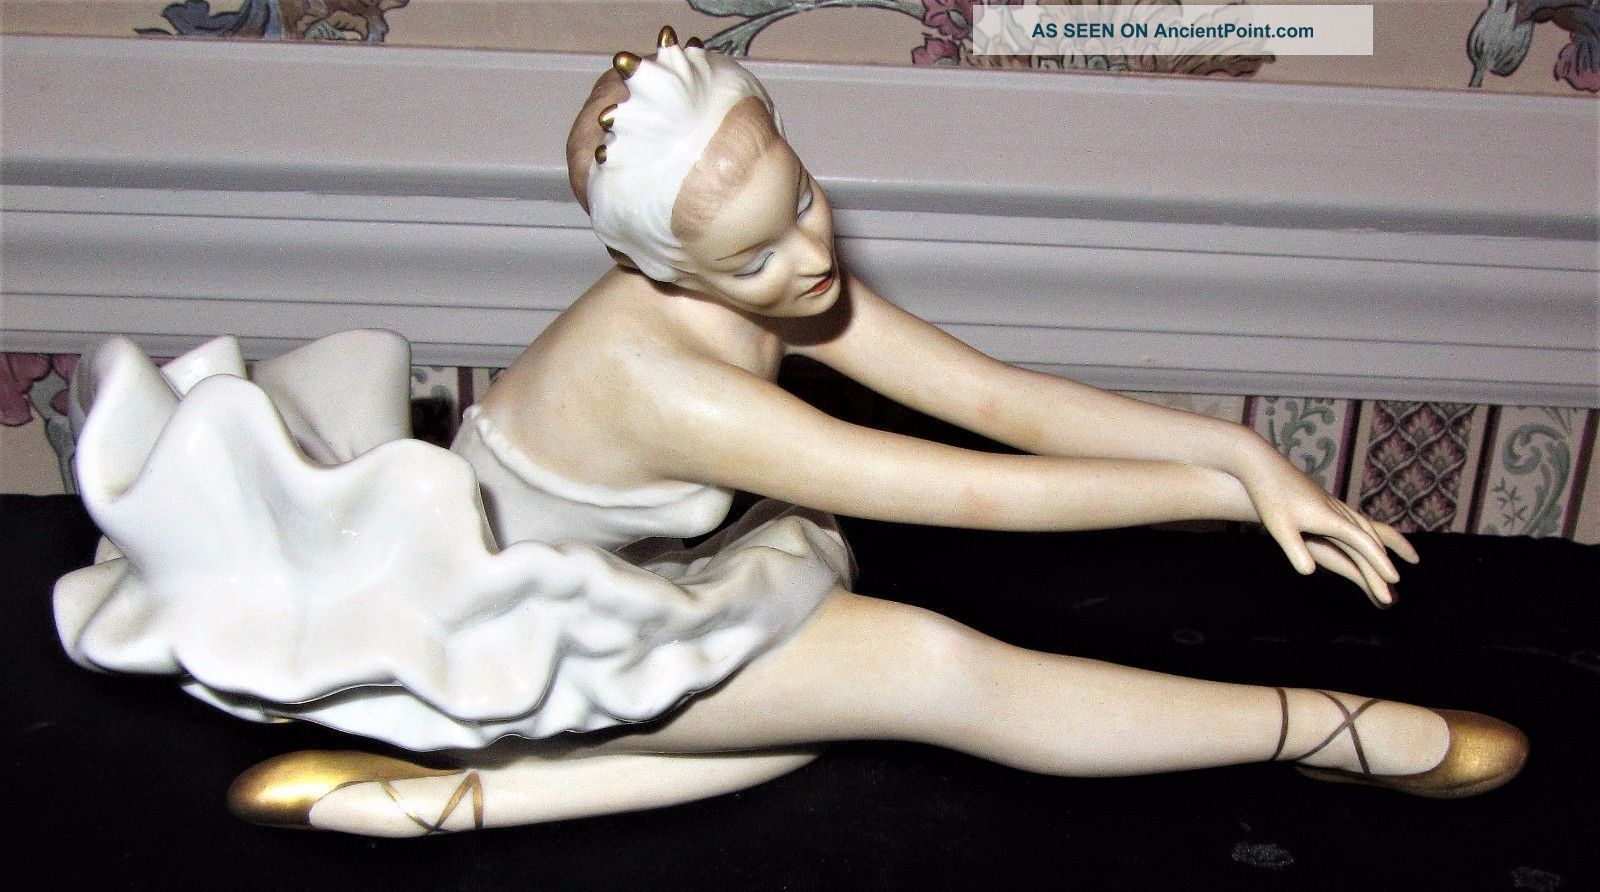 Wallendorf Schaubach Kunst Germany Swan Lake Ballerina Figurine 1609/2; Figurines photo